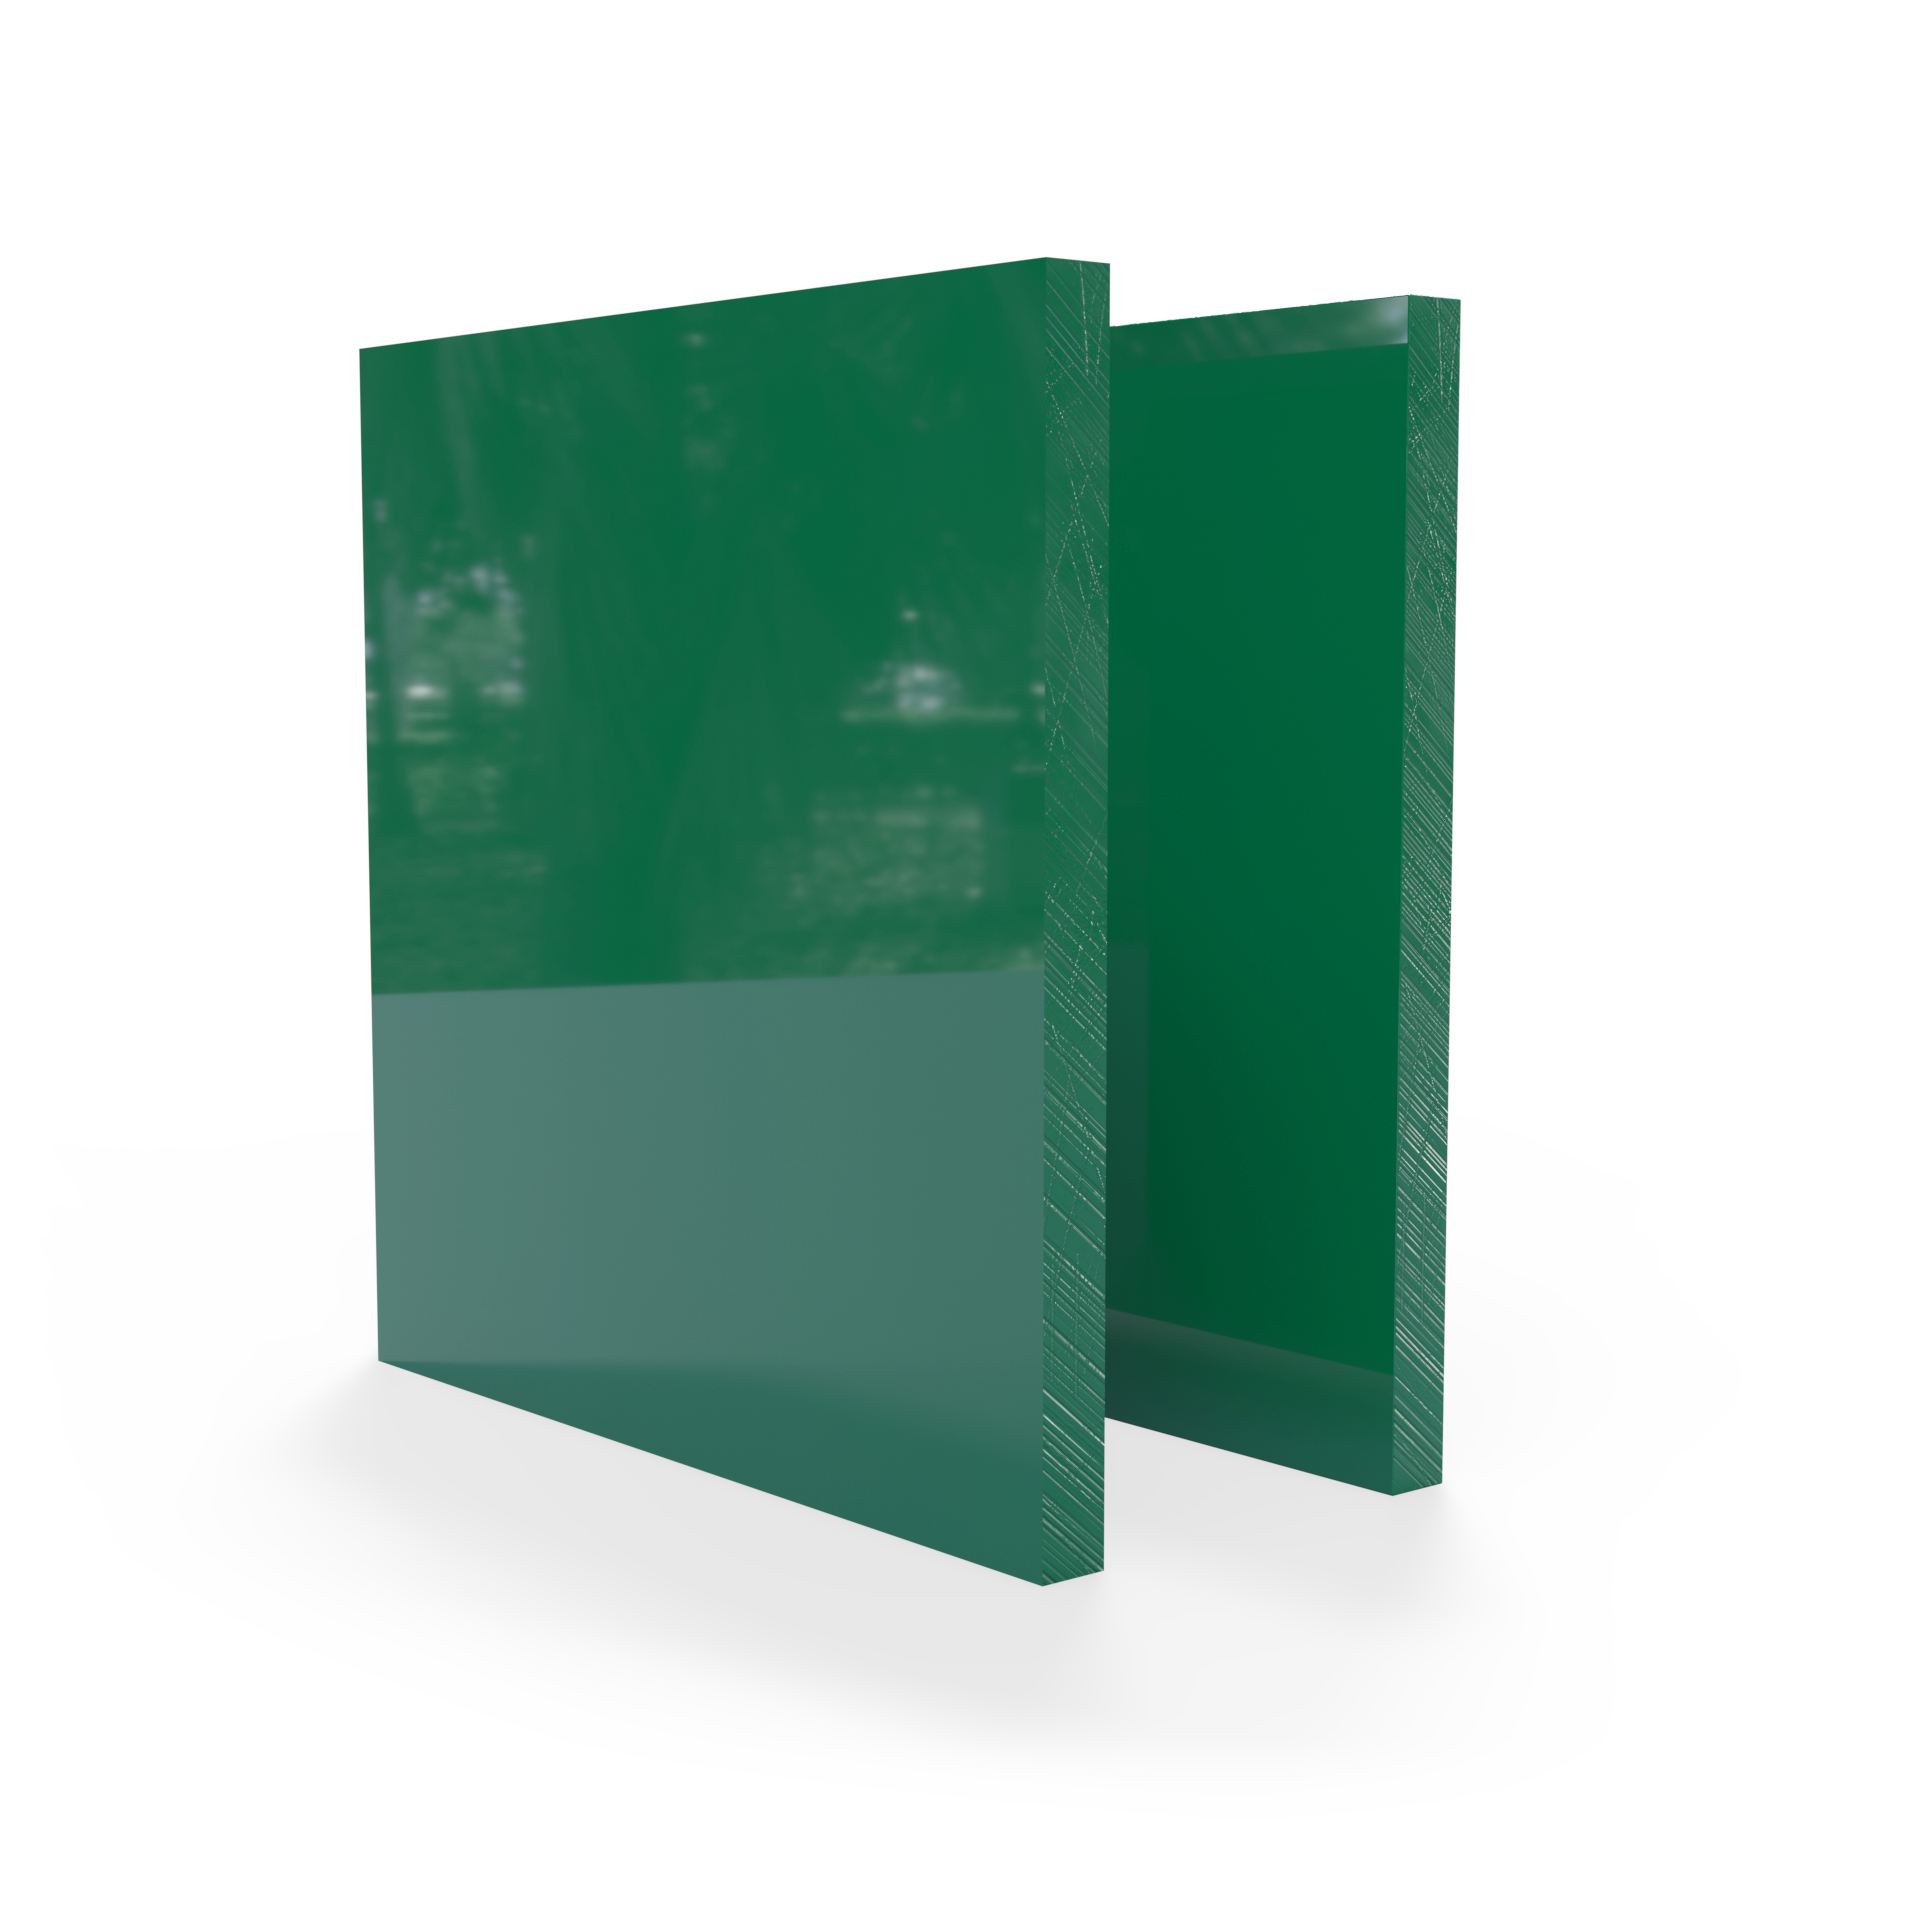 Plexiglas grün 8 mm - Plexideal